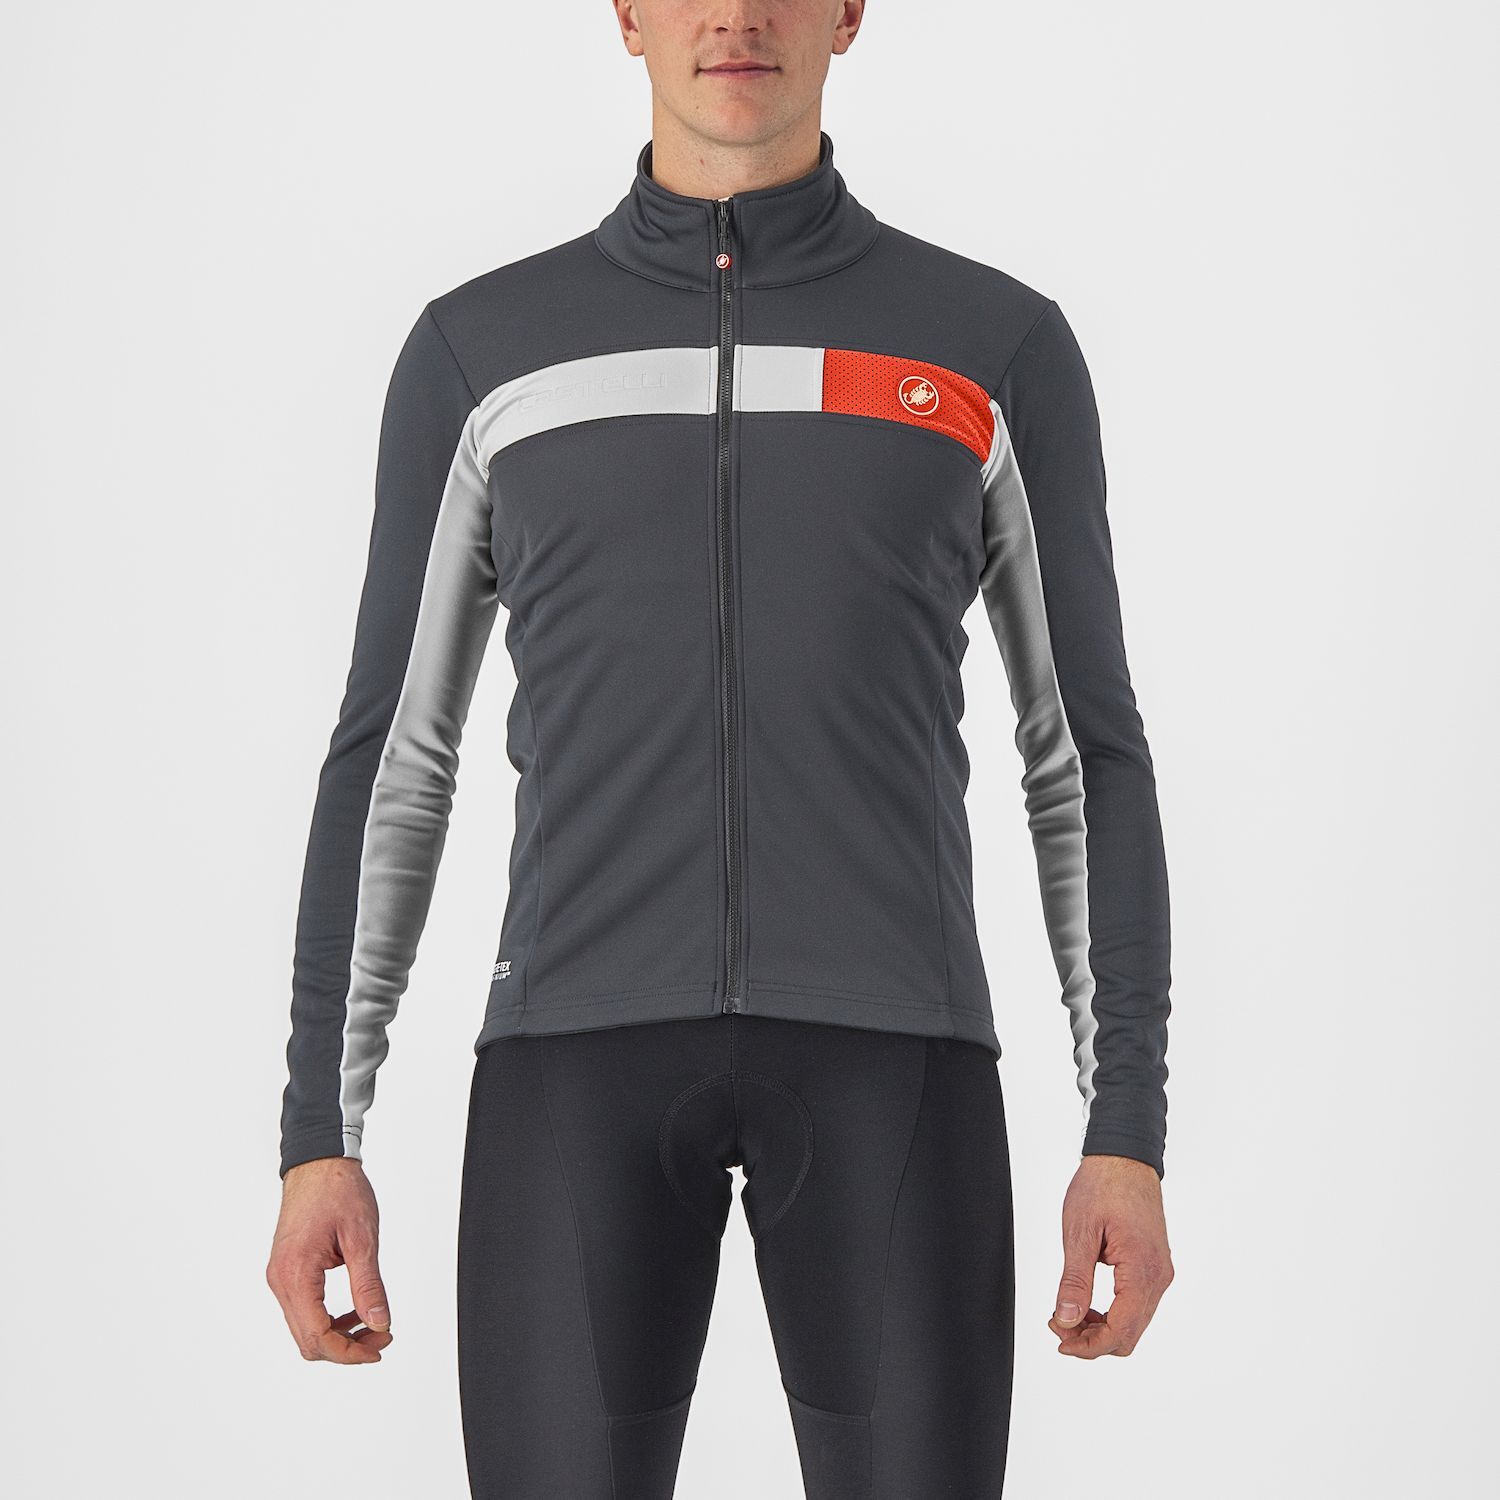 Castelli Mortirolo 6S - Cycling jacket - Men's